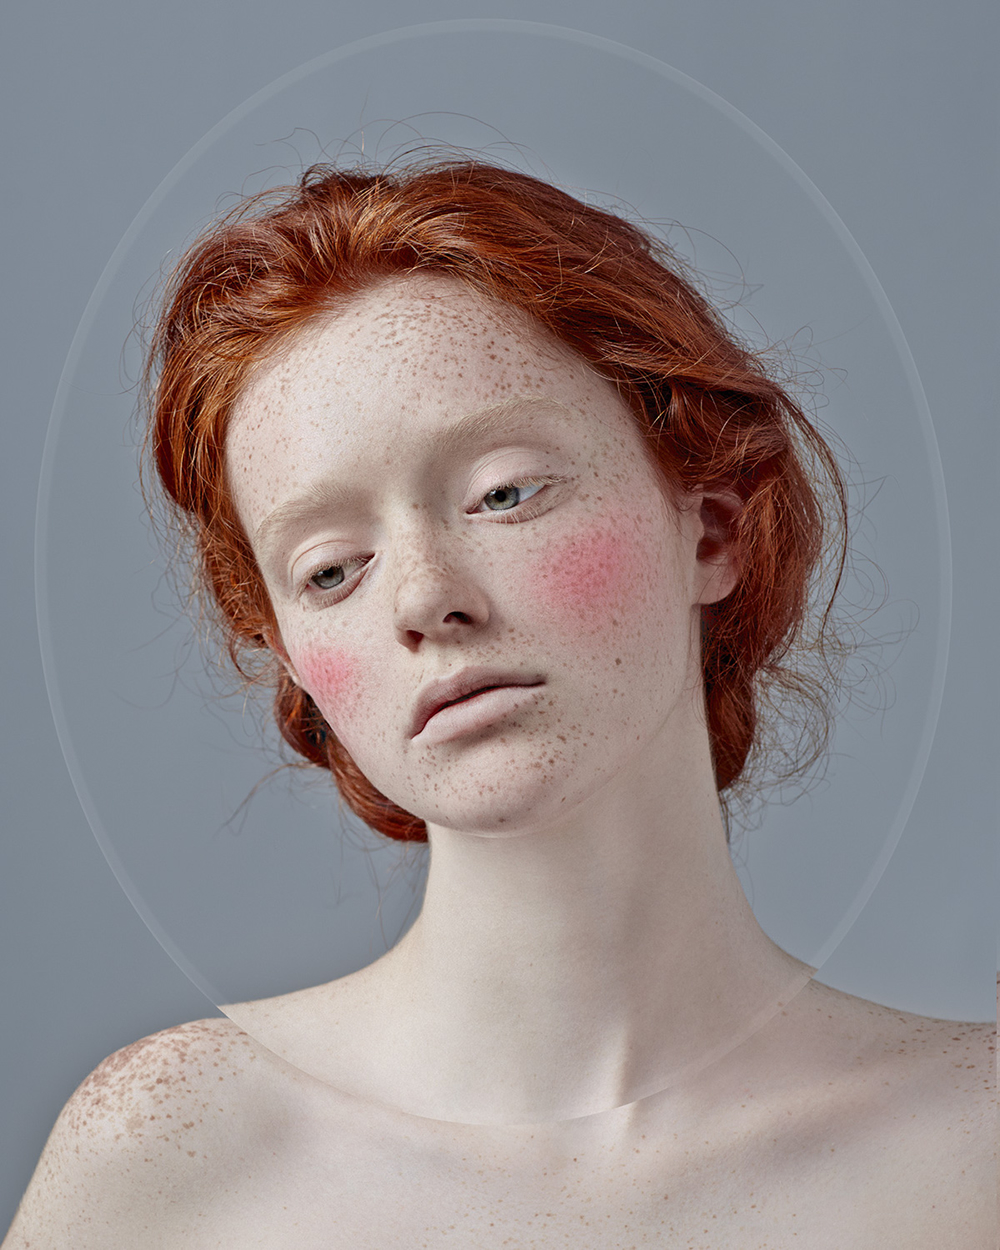 Fantastic Fine-Art Portrait Photography By Kristina Varaksina